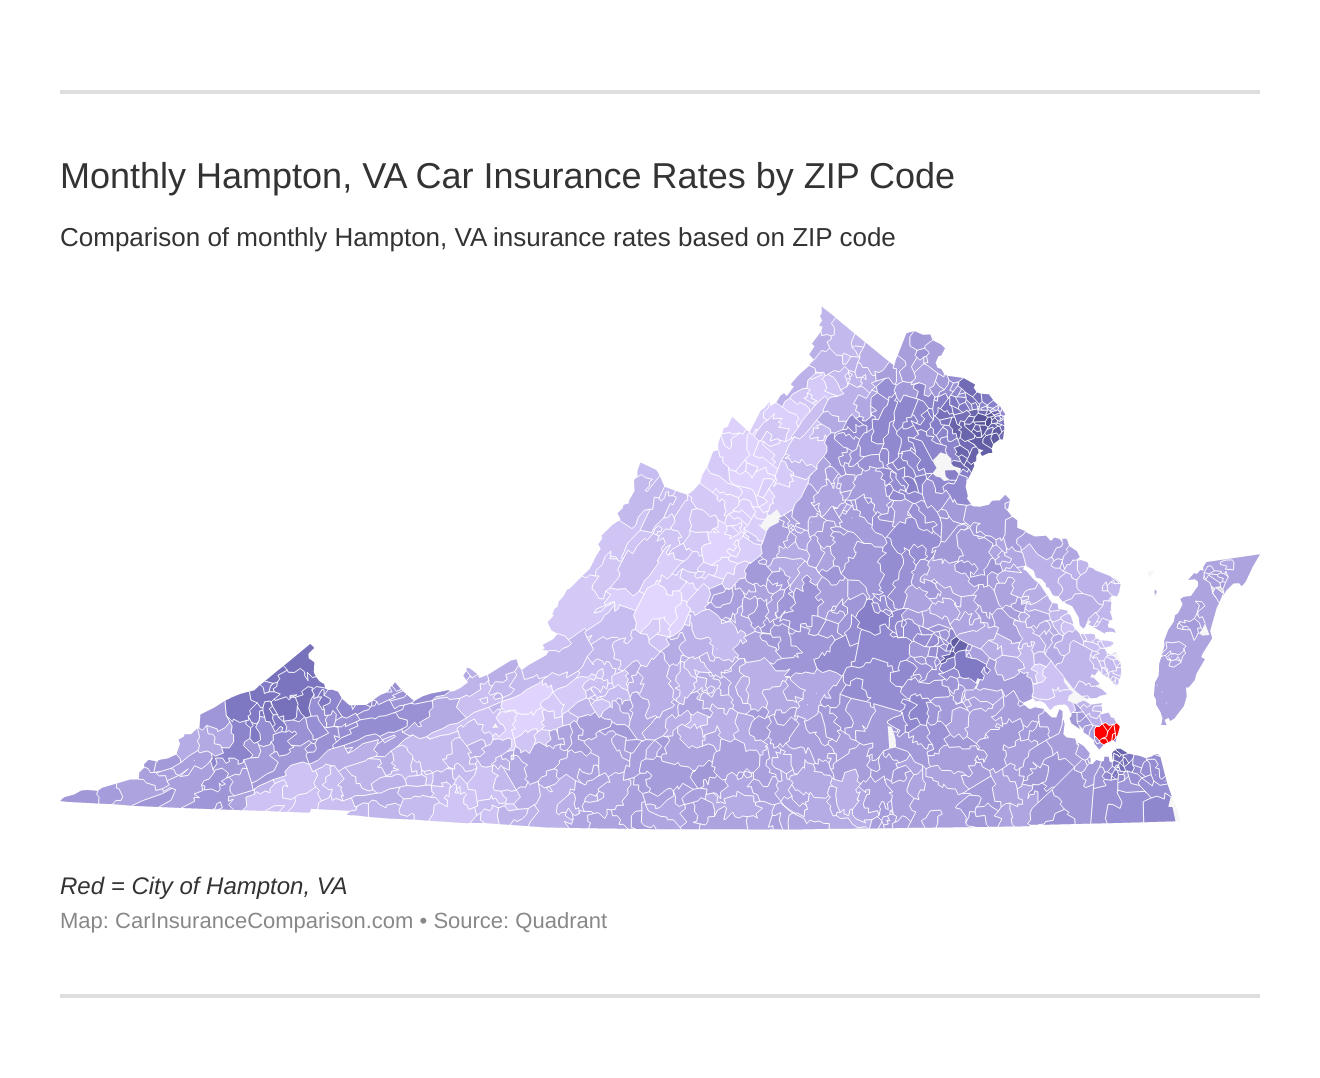 Monthly Hampton, VA Car Insurance Rates by ZIP Code